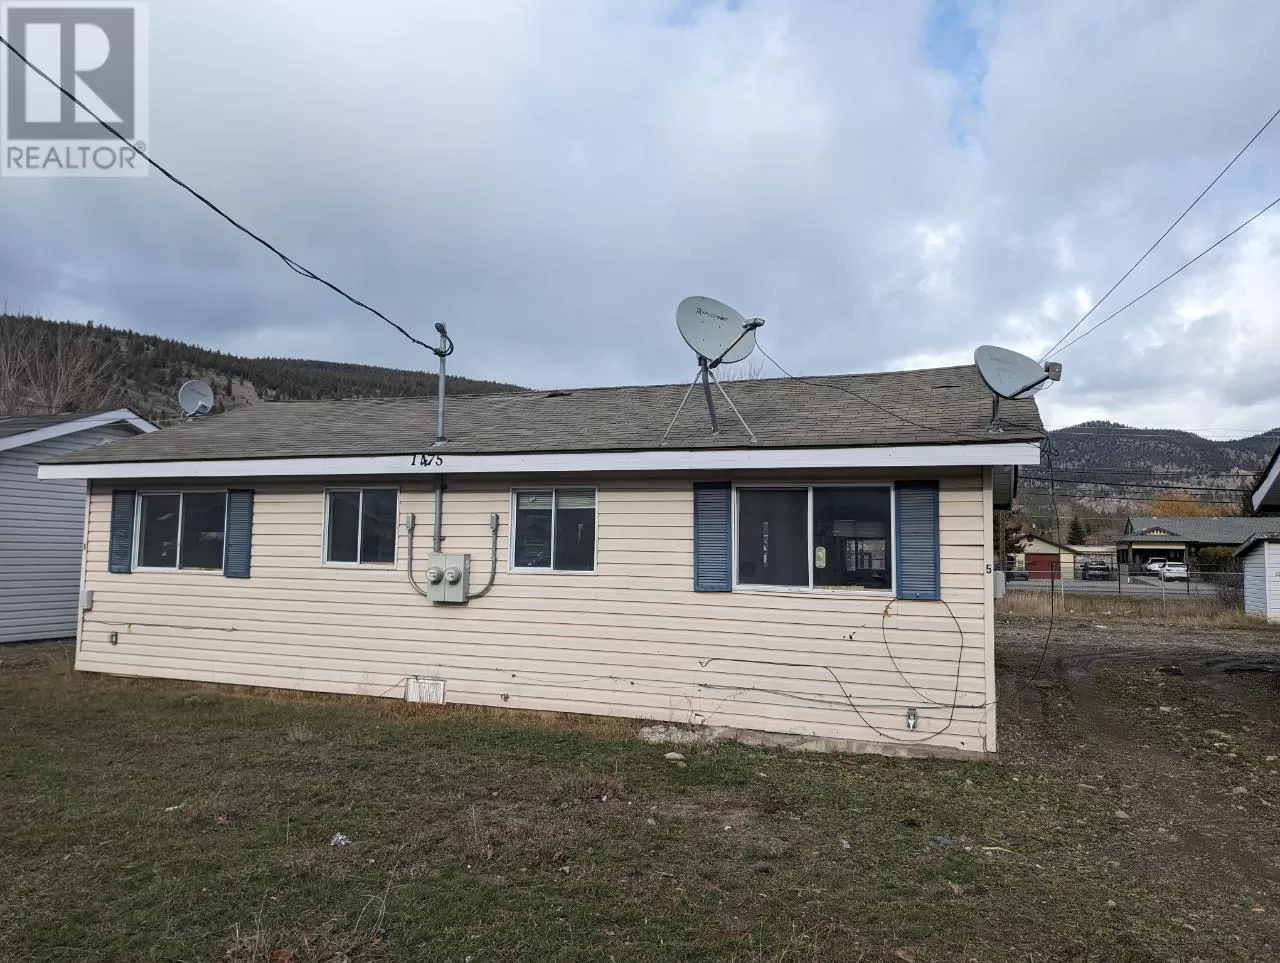 Duplex for rent: 1475 Coldwater Ave, Merritt, British Columbia V1K 1B8